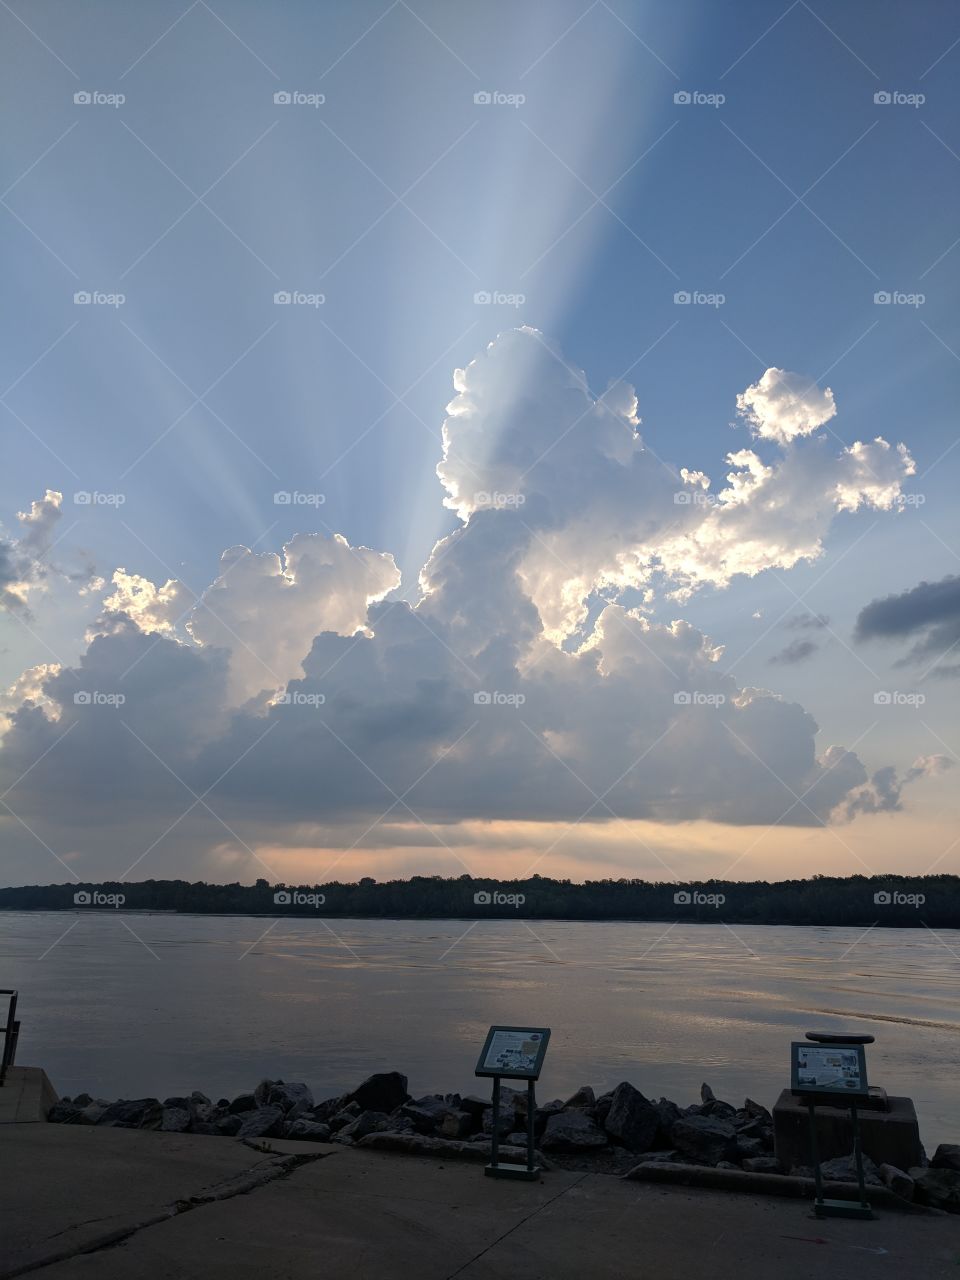 Sunrise over the Mississippi River